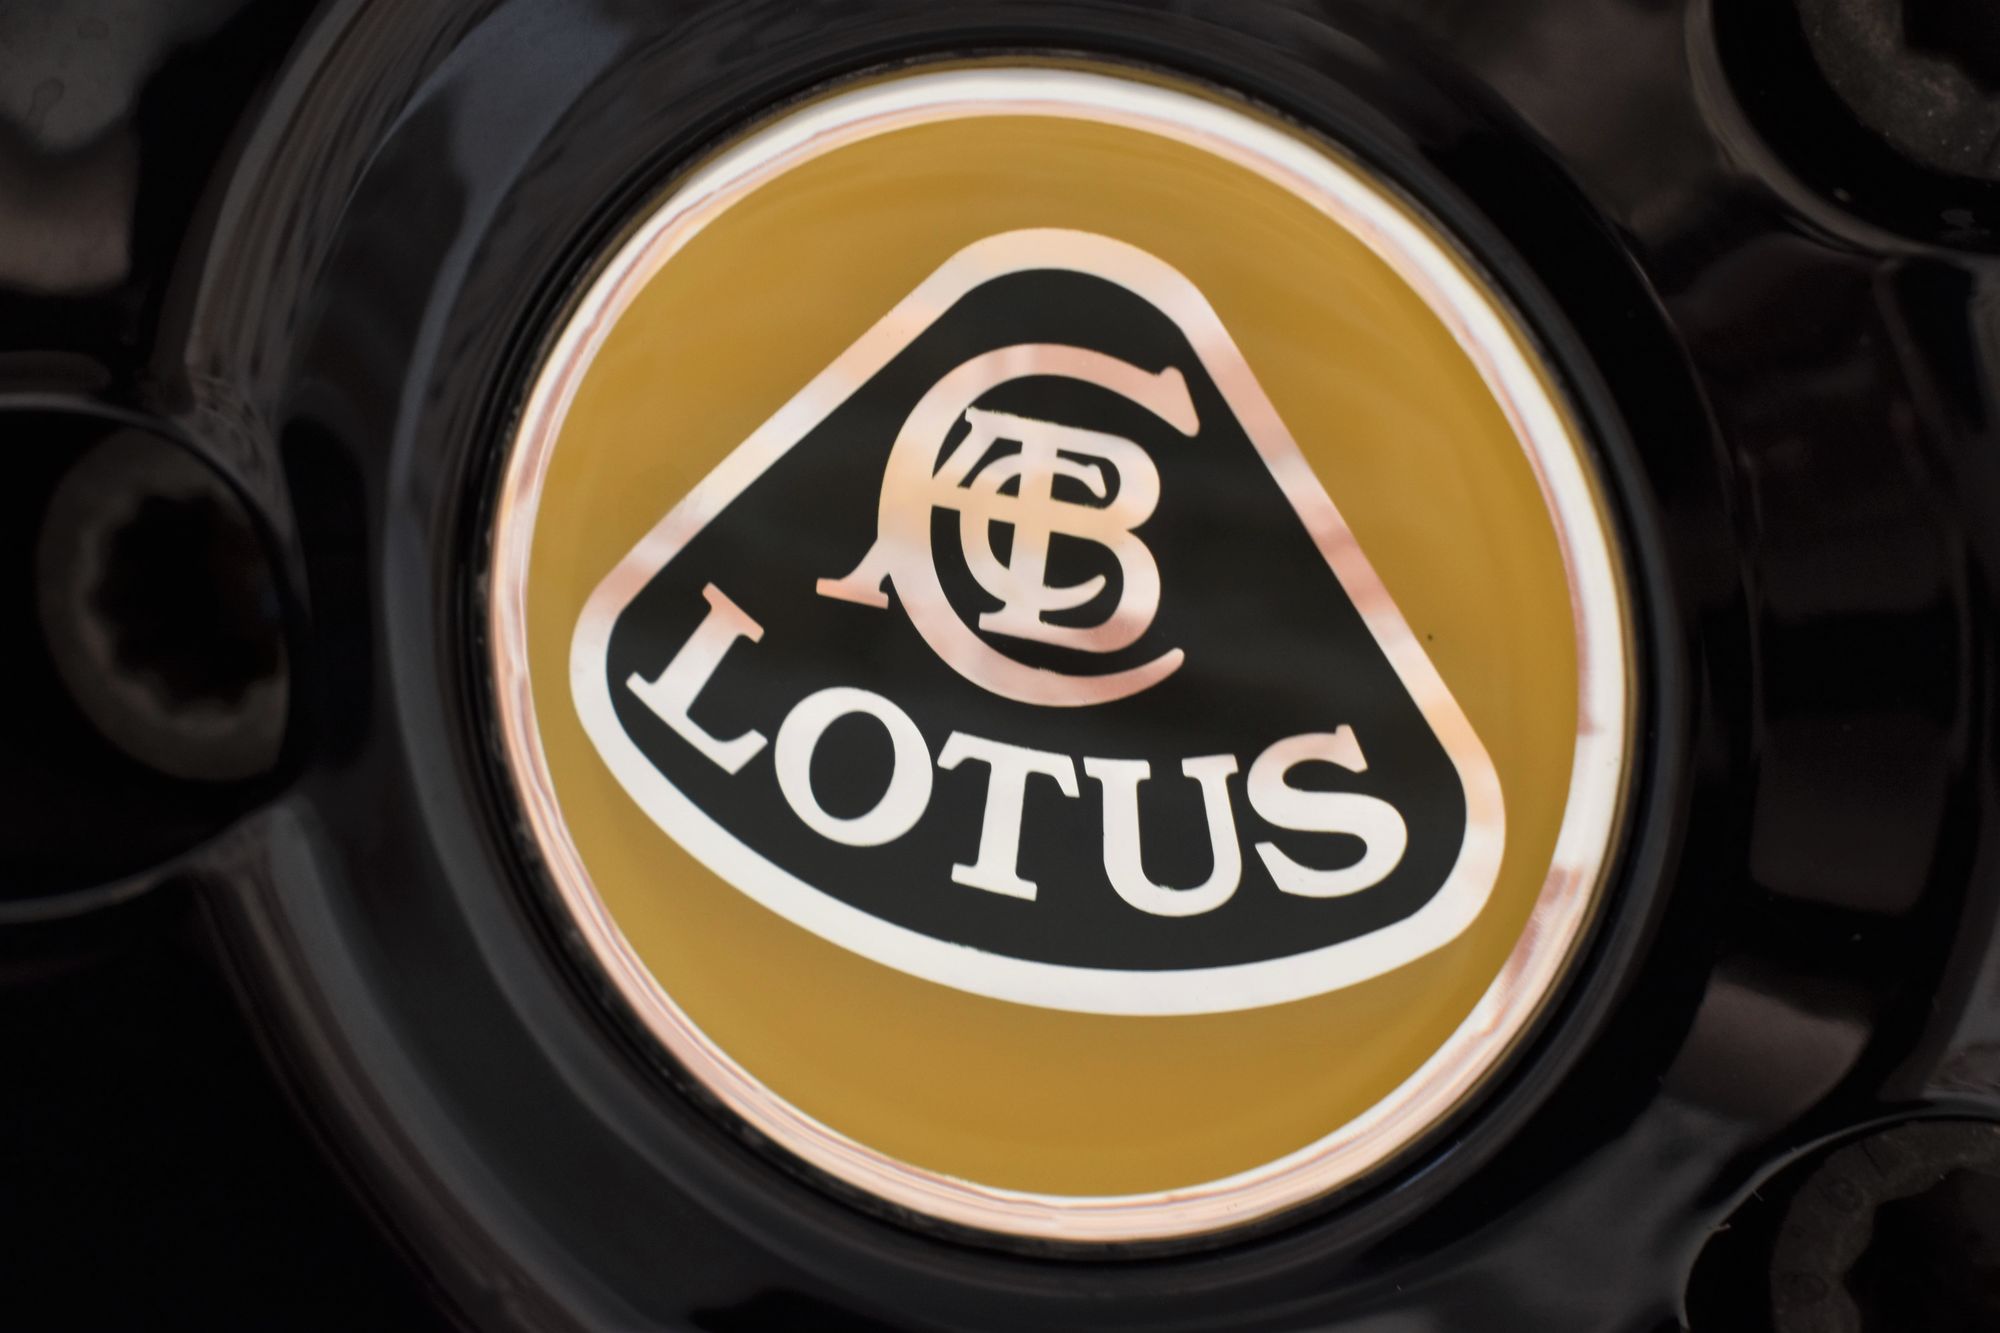 2020 Lotus Evora GT410 Sport